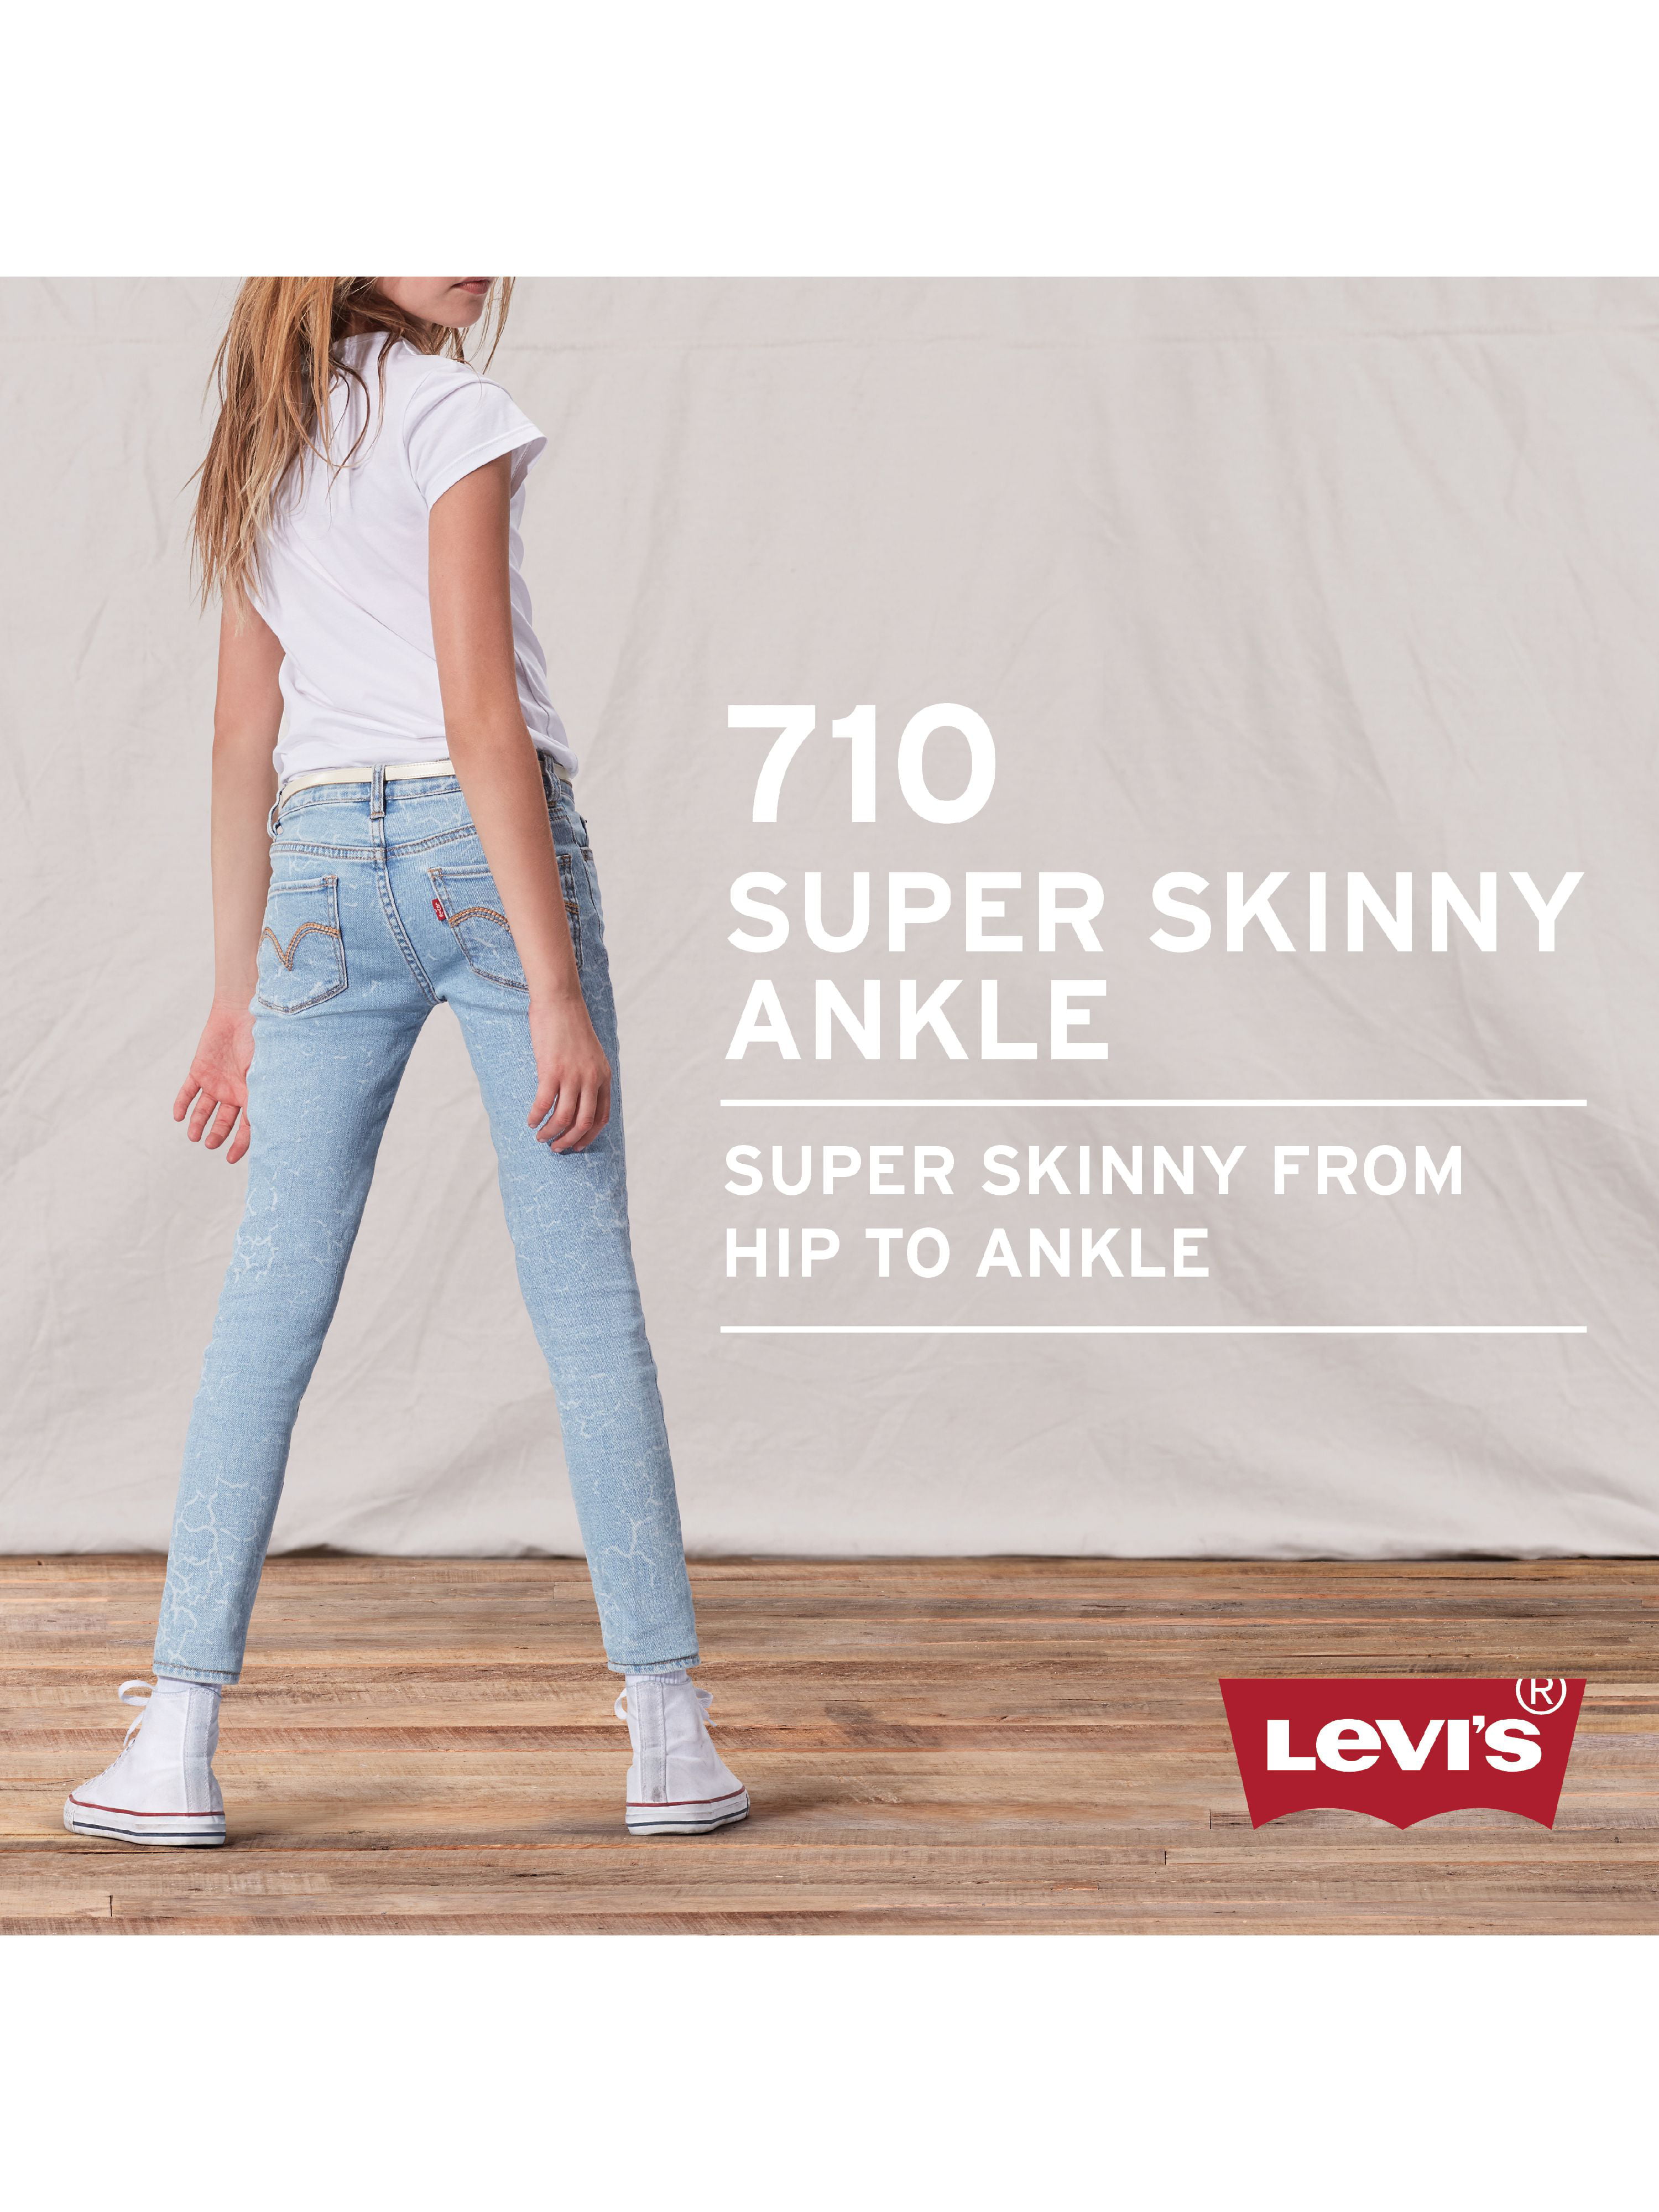 levi's 710 ankle super skinny